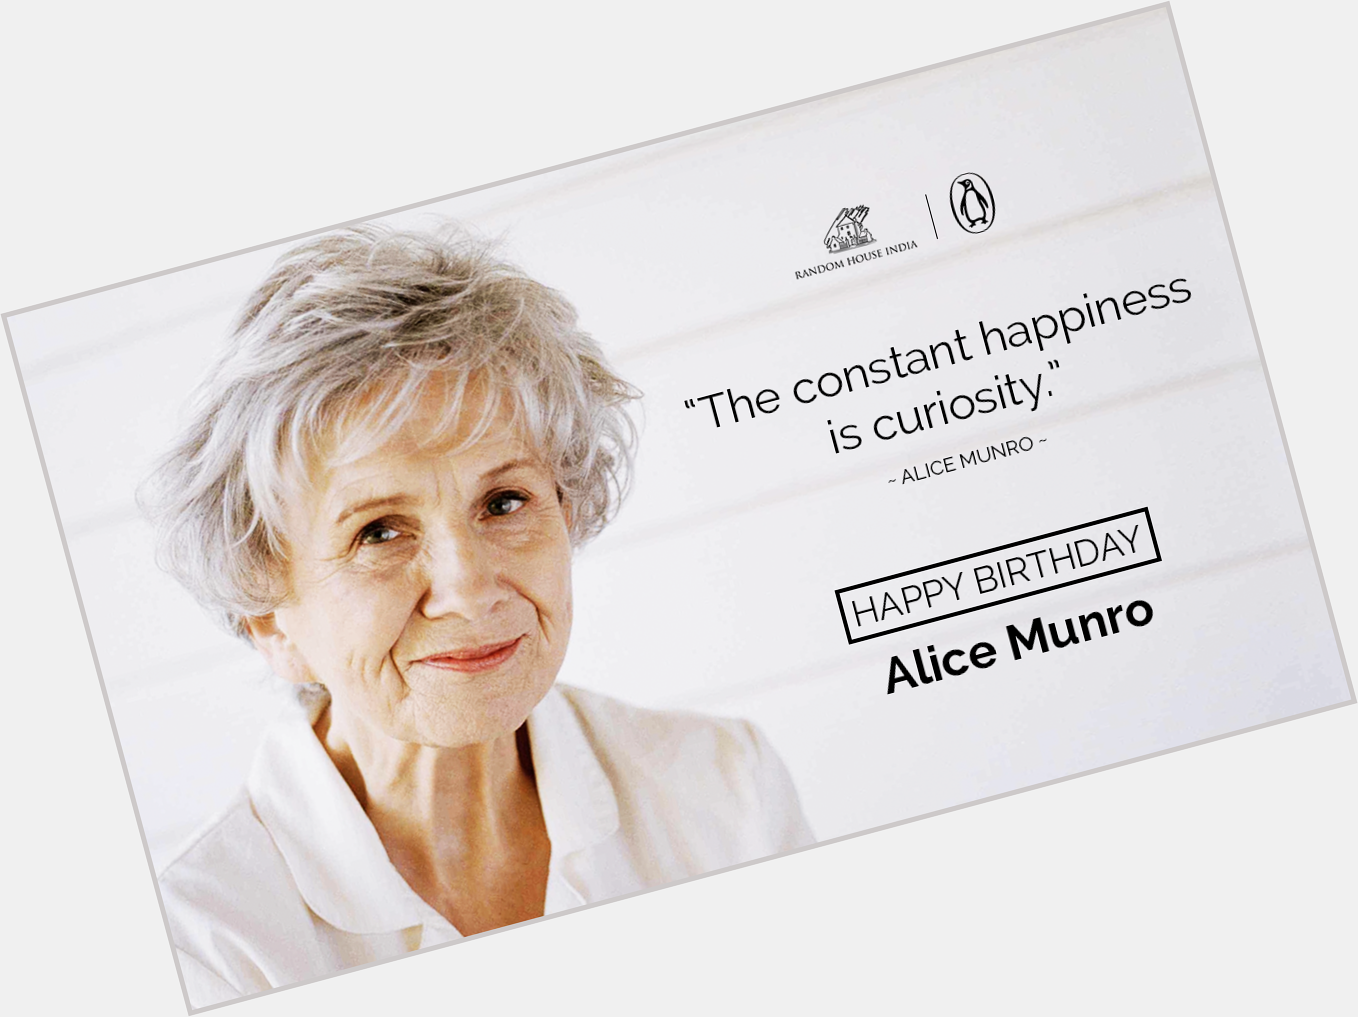 Wishing Nobel Laureate Alice Munro a very Happy Birthday! 